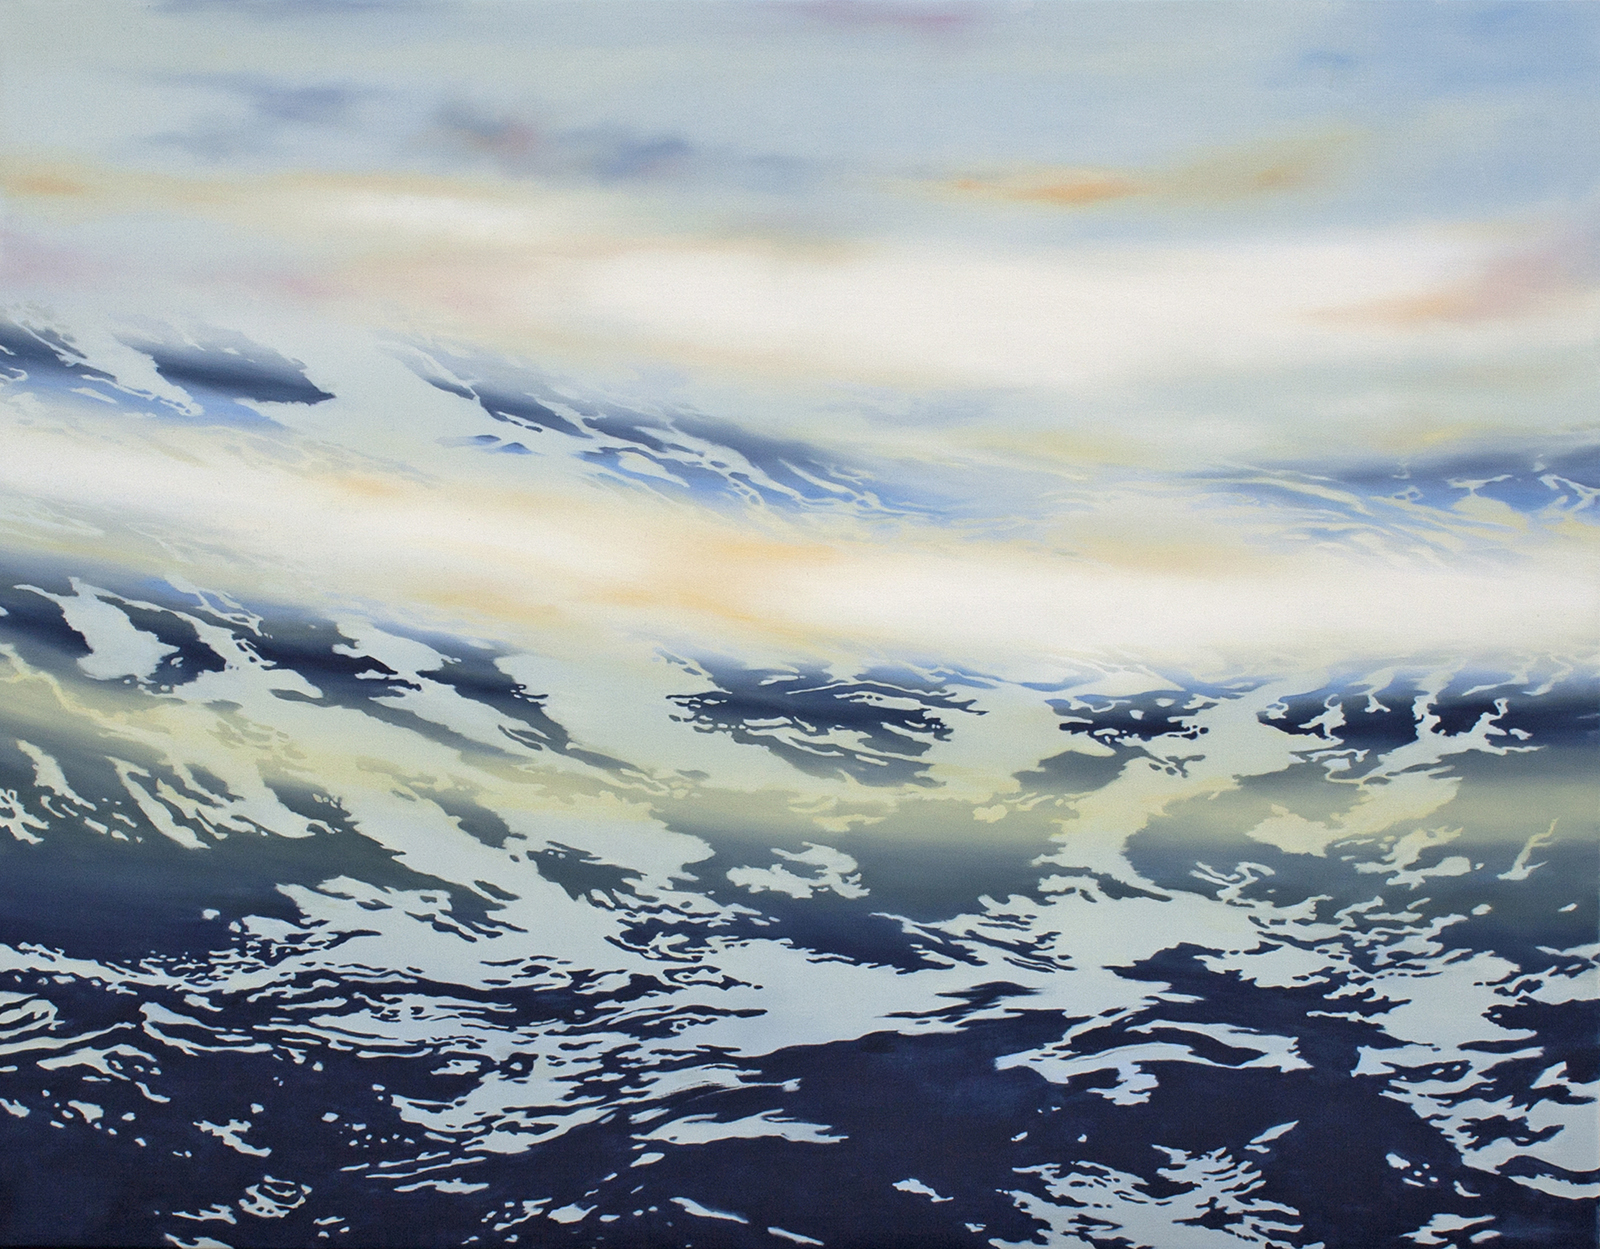 Höhenzug 2013, 120 x 150 cm, Öl auf Leinwand   Mountain Ridge 2013